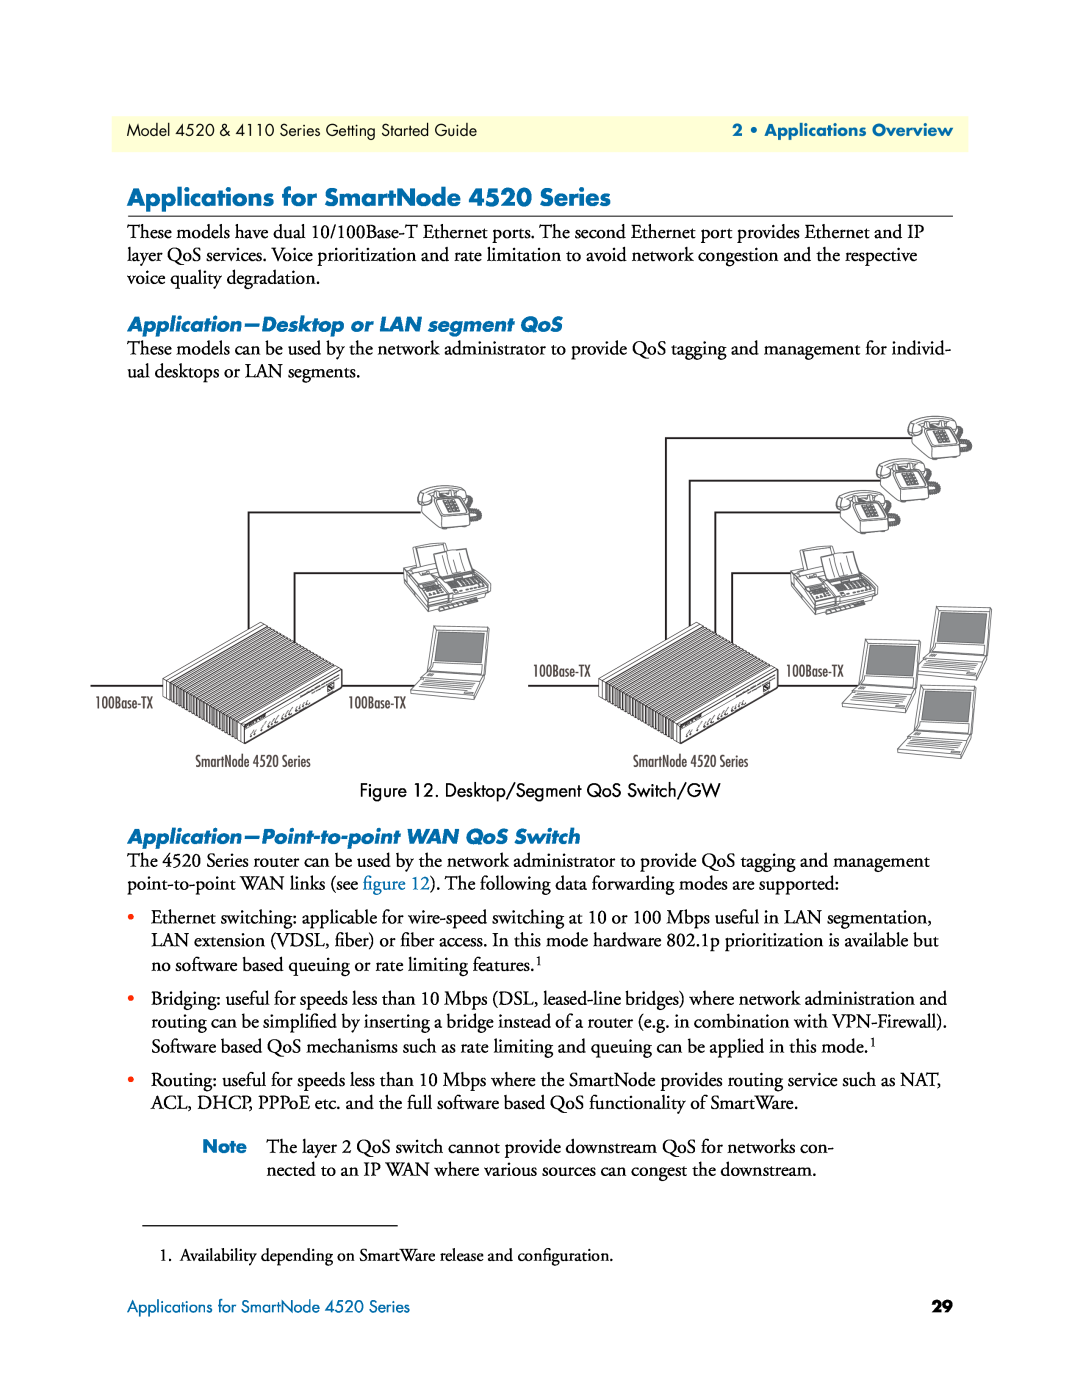 Patton electronic 4110 manual Applications for SmartNode 4520 Series, Application-Desktop or LAN segment QoS 